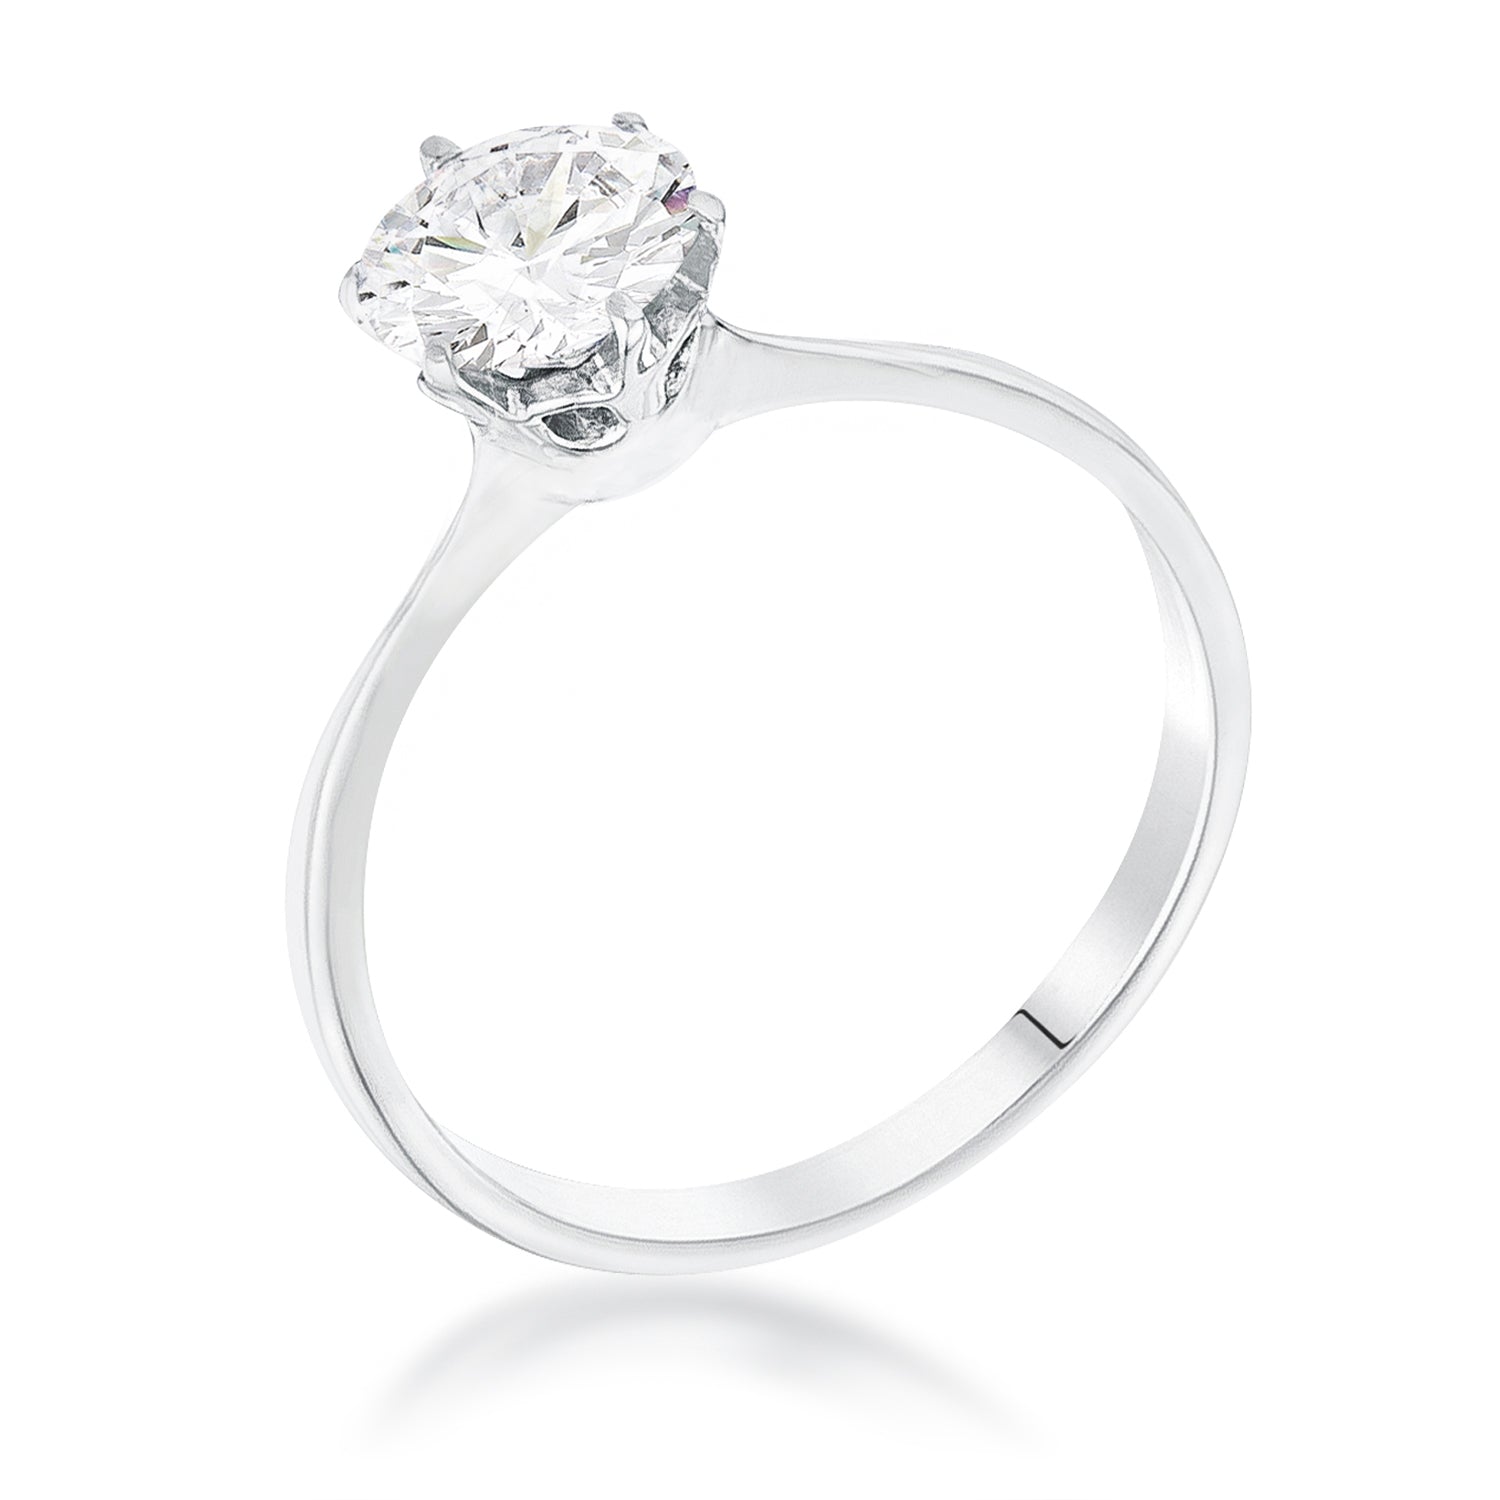 14k White Gold 1 Carat Solitaire Brilliant Round Cut Diamond Engagement Ring  | Amazon.com